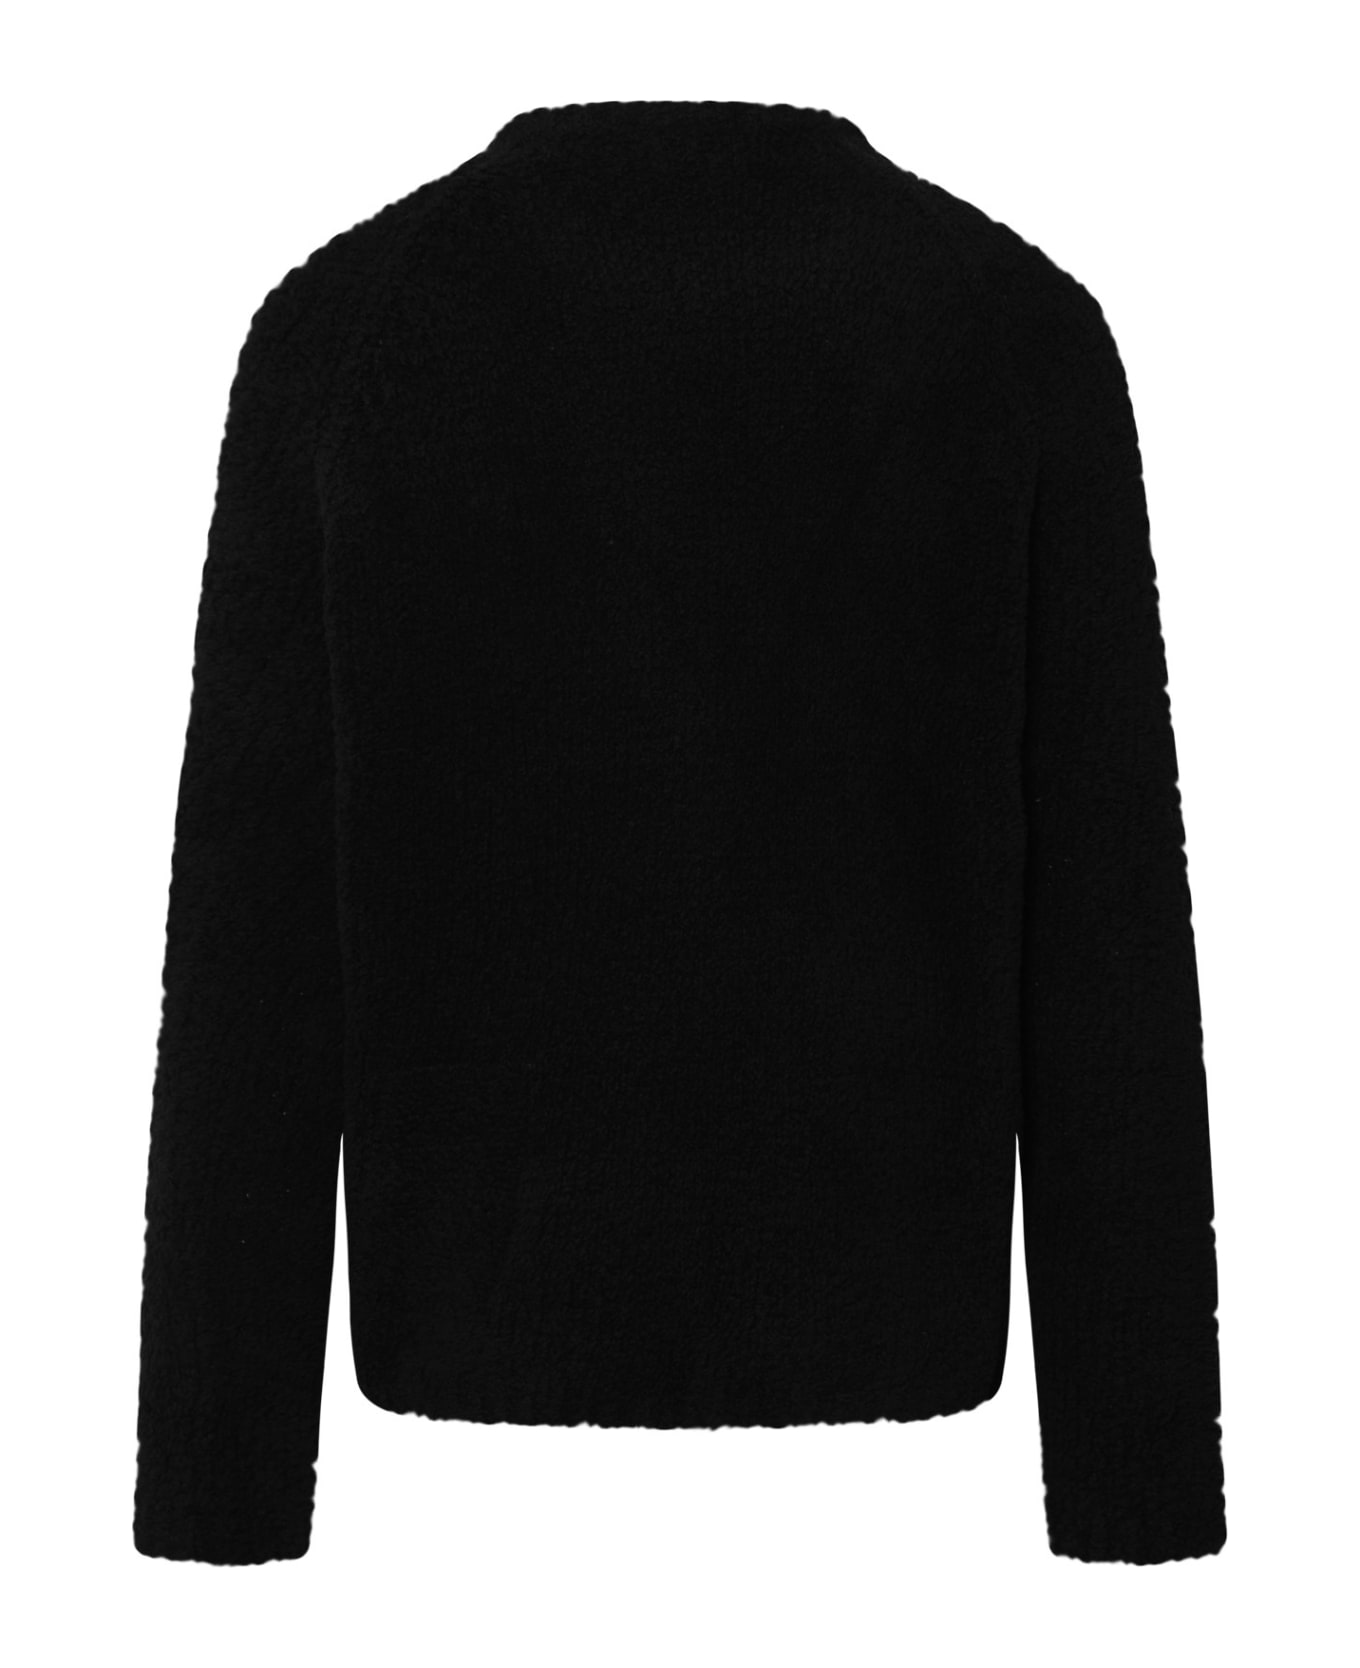 Ten C Black Wool Blend Sweater - Black